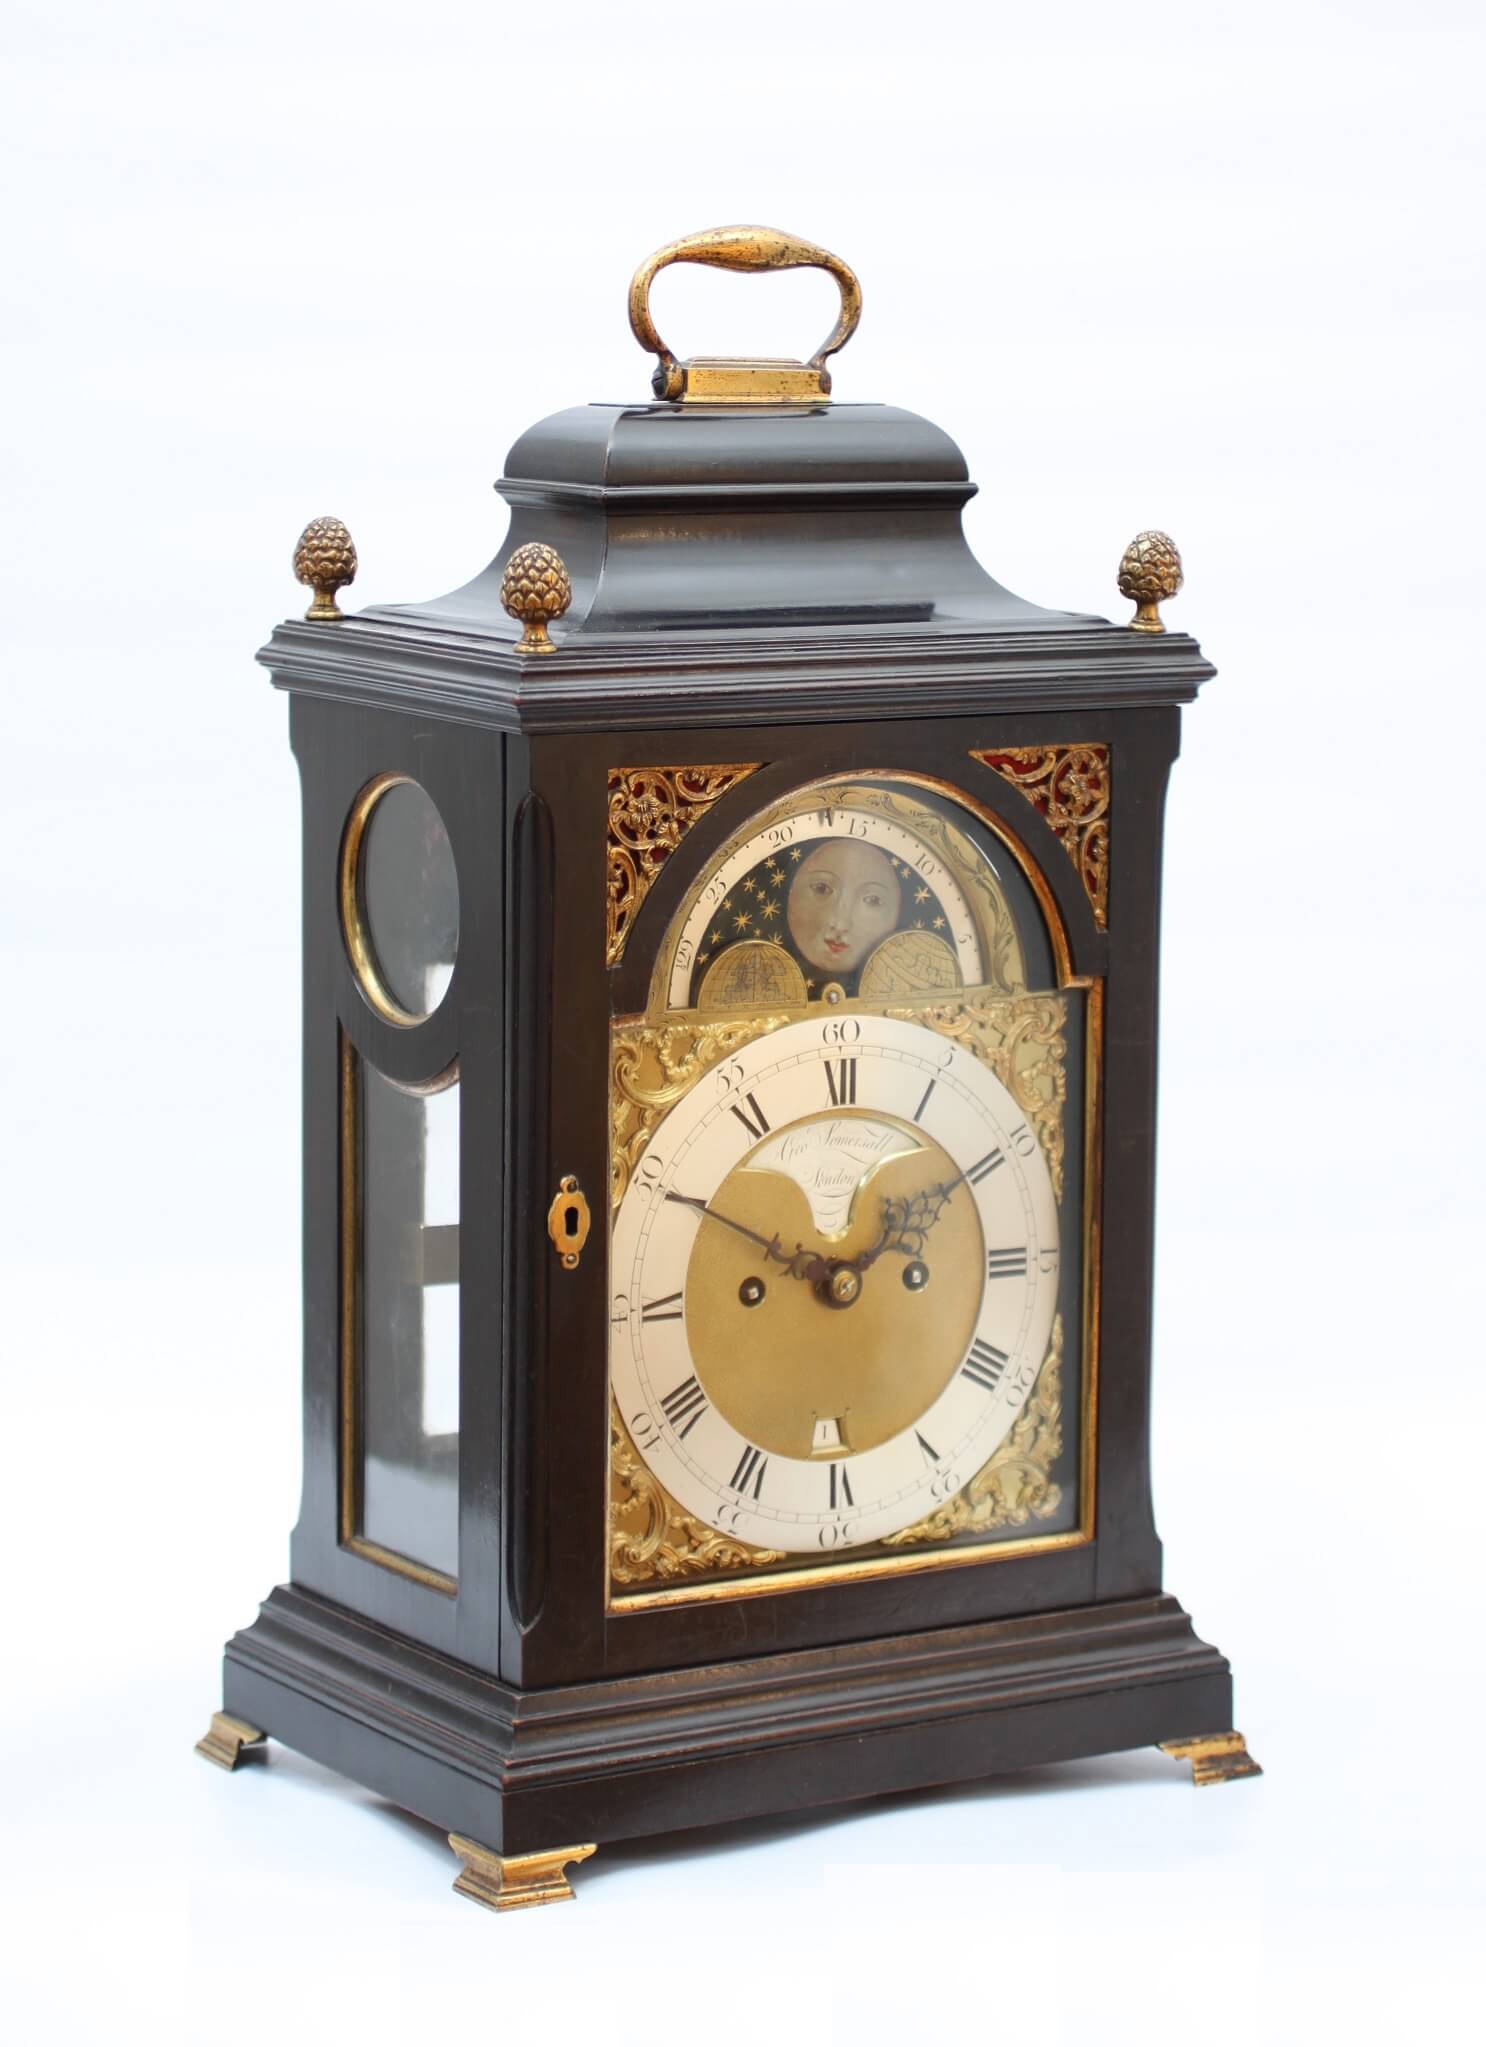 English Dutch market striking repeat moonphase bracket clock 1770